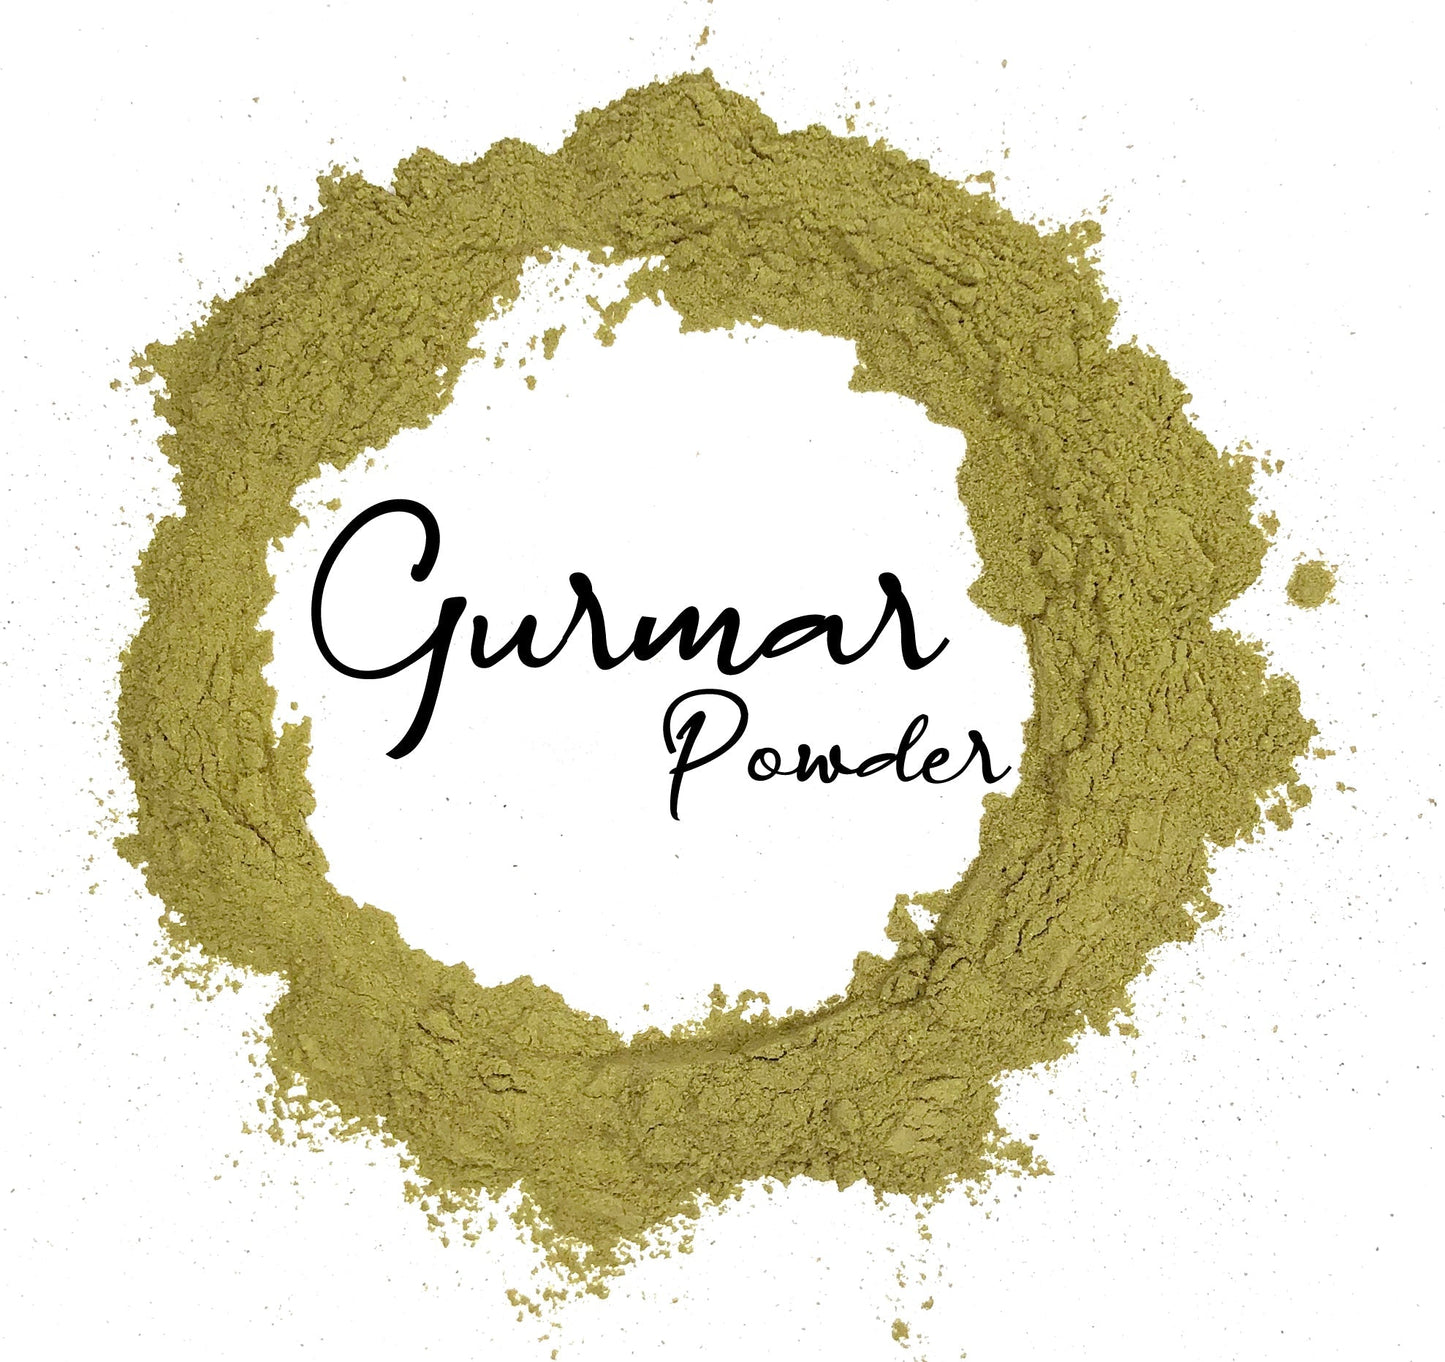 Wholesale Spices & Herbs - Gurmar Powder, Organic 8oz(227g) Bag